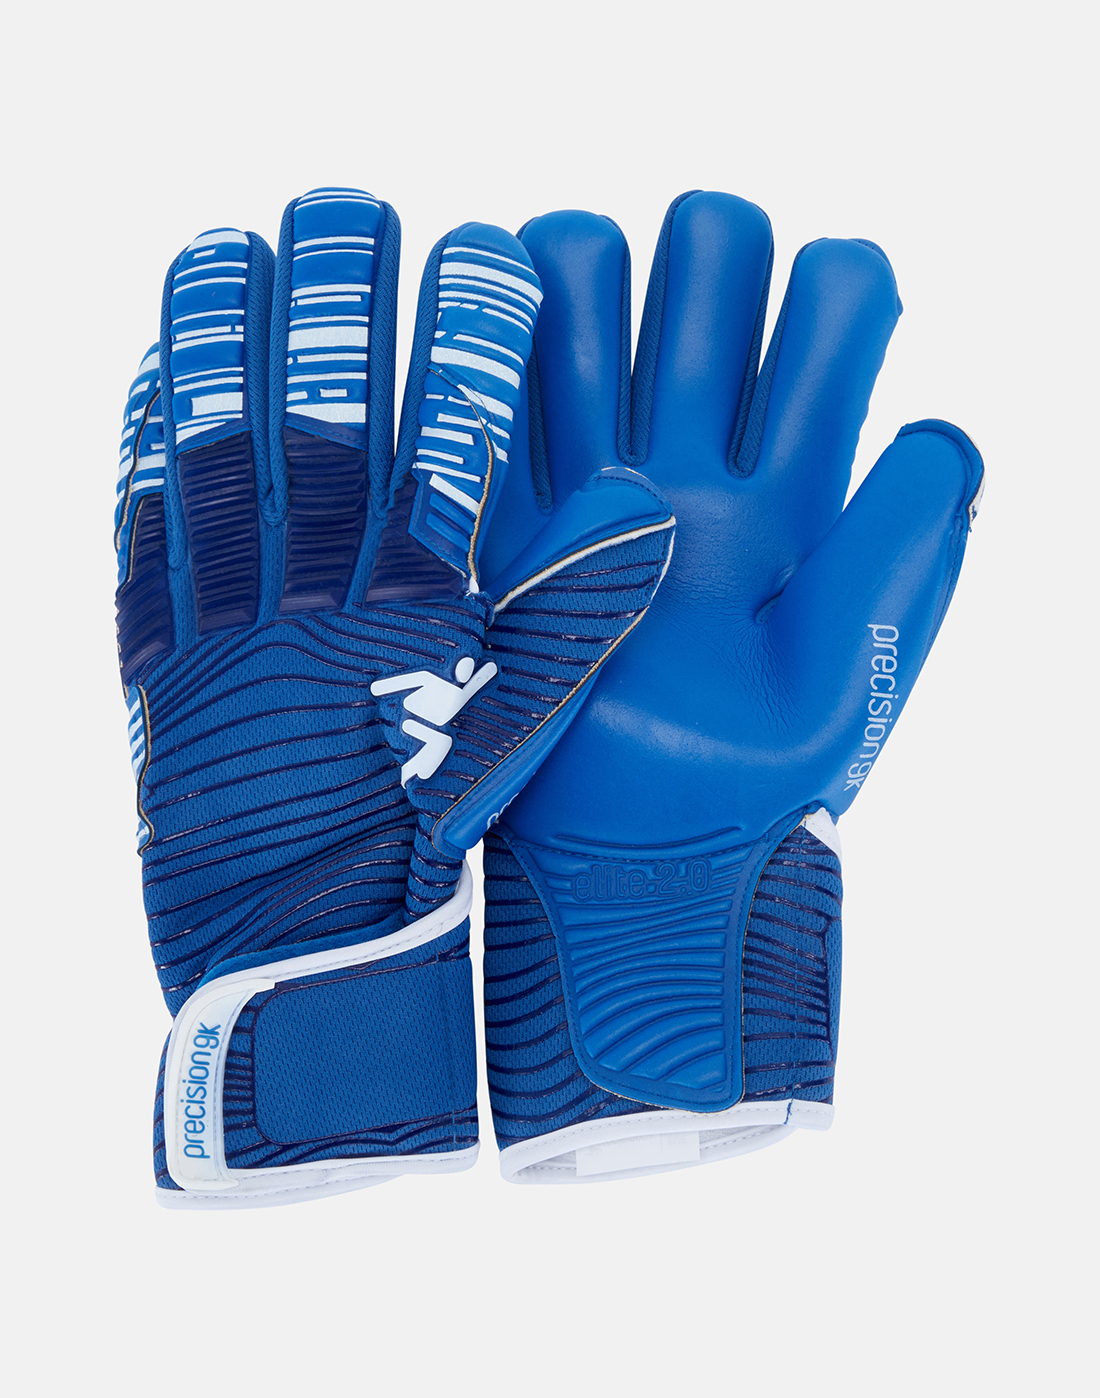 Precision Elite 2.0 Grip Negative Adult Football Goalkeeper Glove Blue 